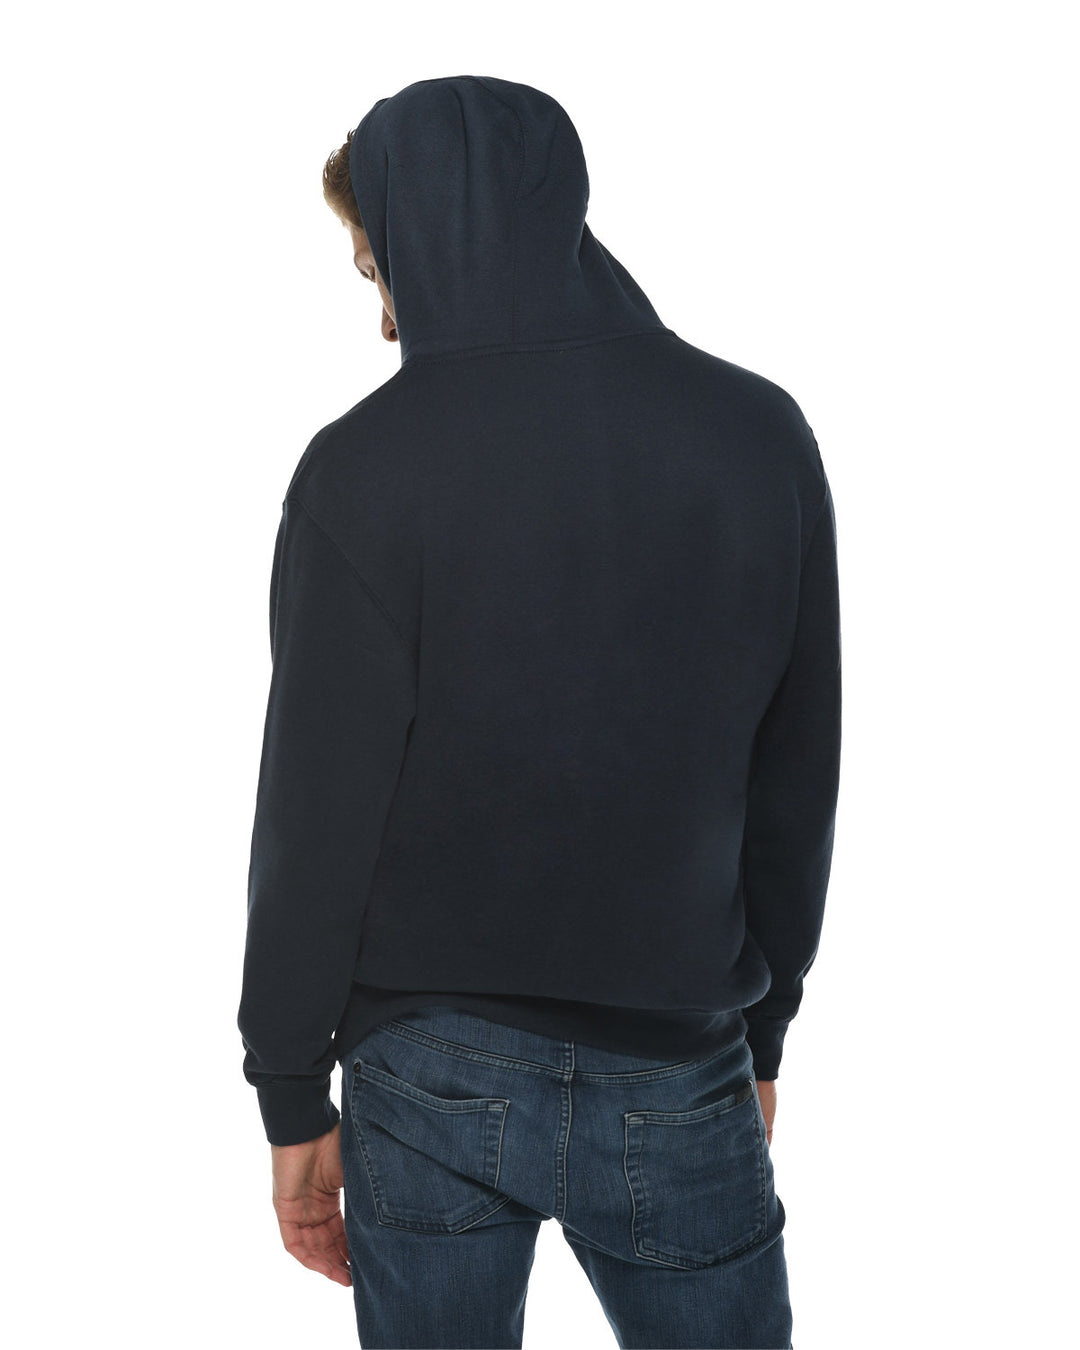 Unisex Premium Pullover Hooded Sweatshirt (LS14001)